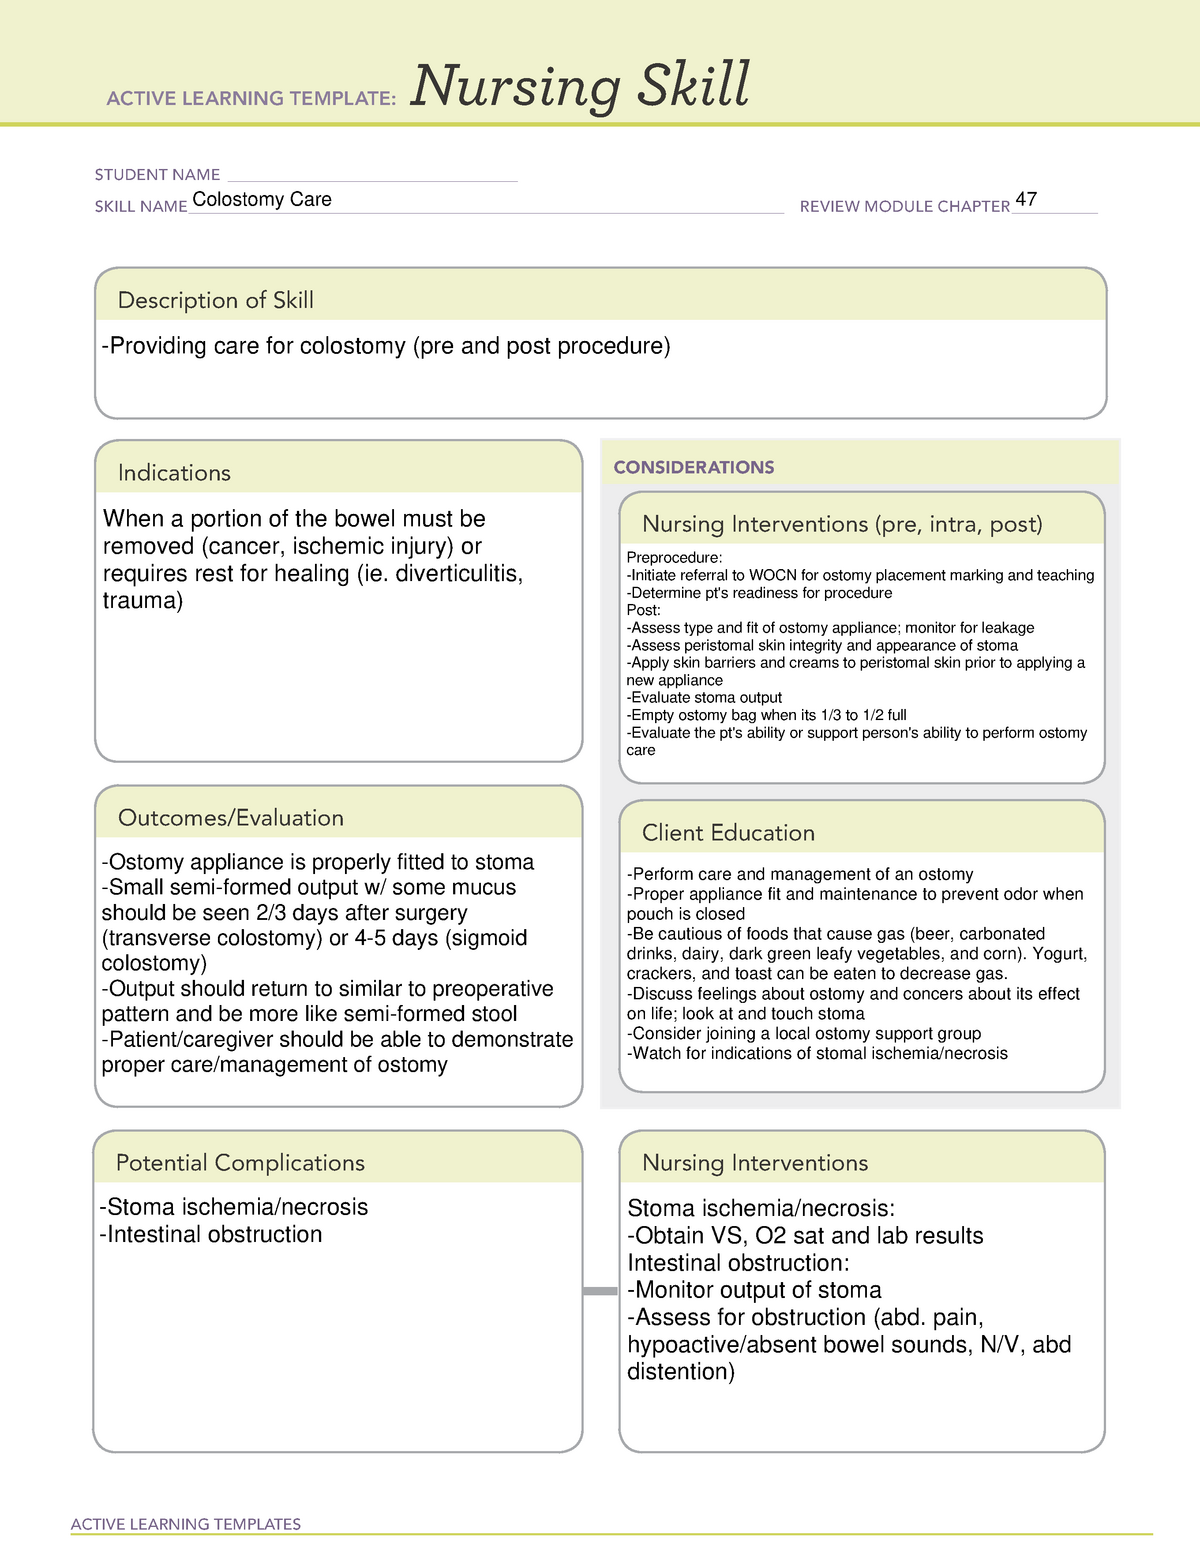 ATI Nursing Skill- Colostomy Care.pdf - ACTIVE LEARNING TEMPLATES ...